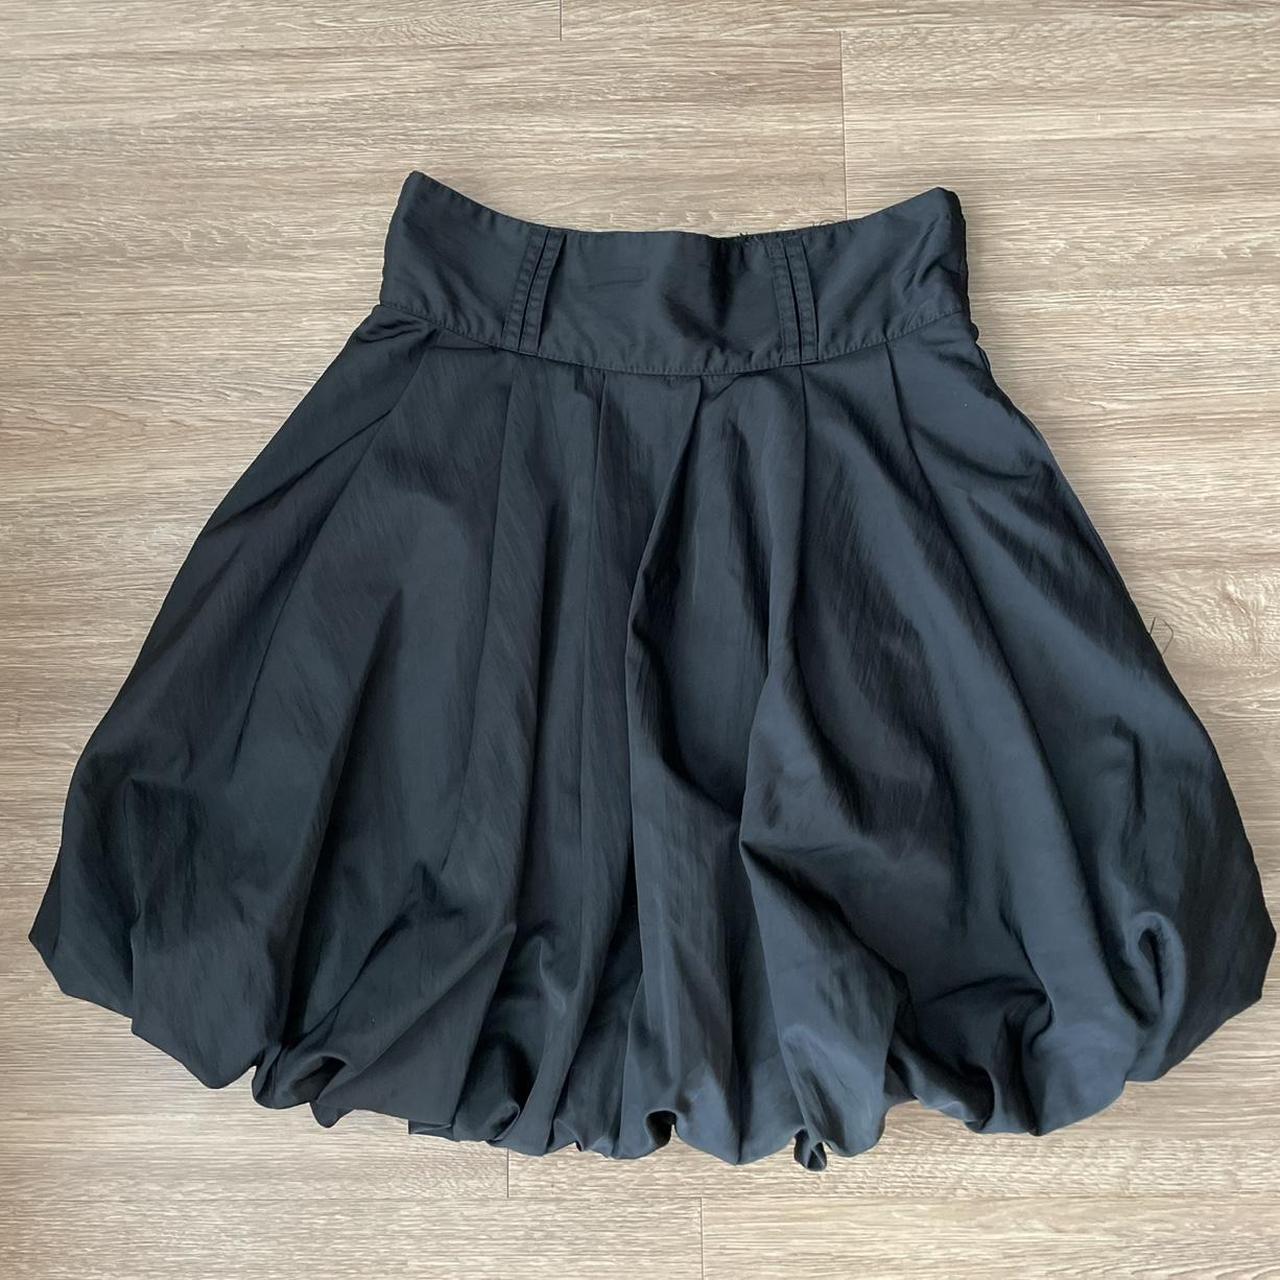 poofy black skirt /// size small - Depop